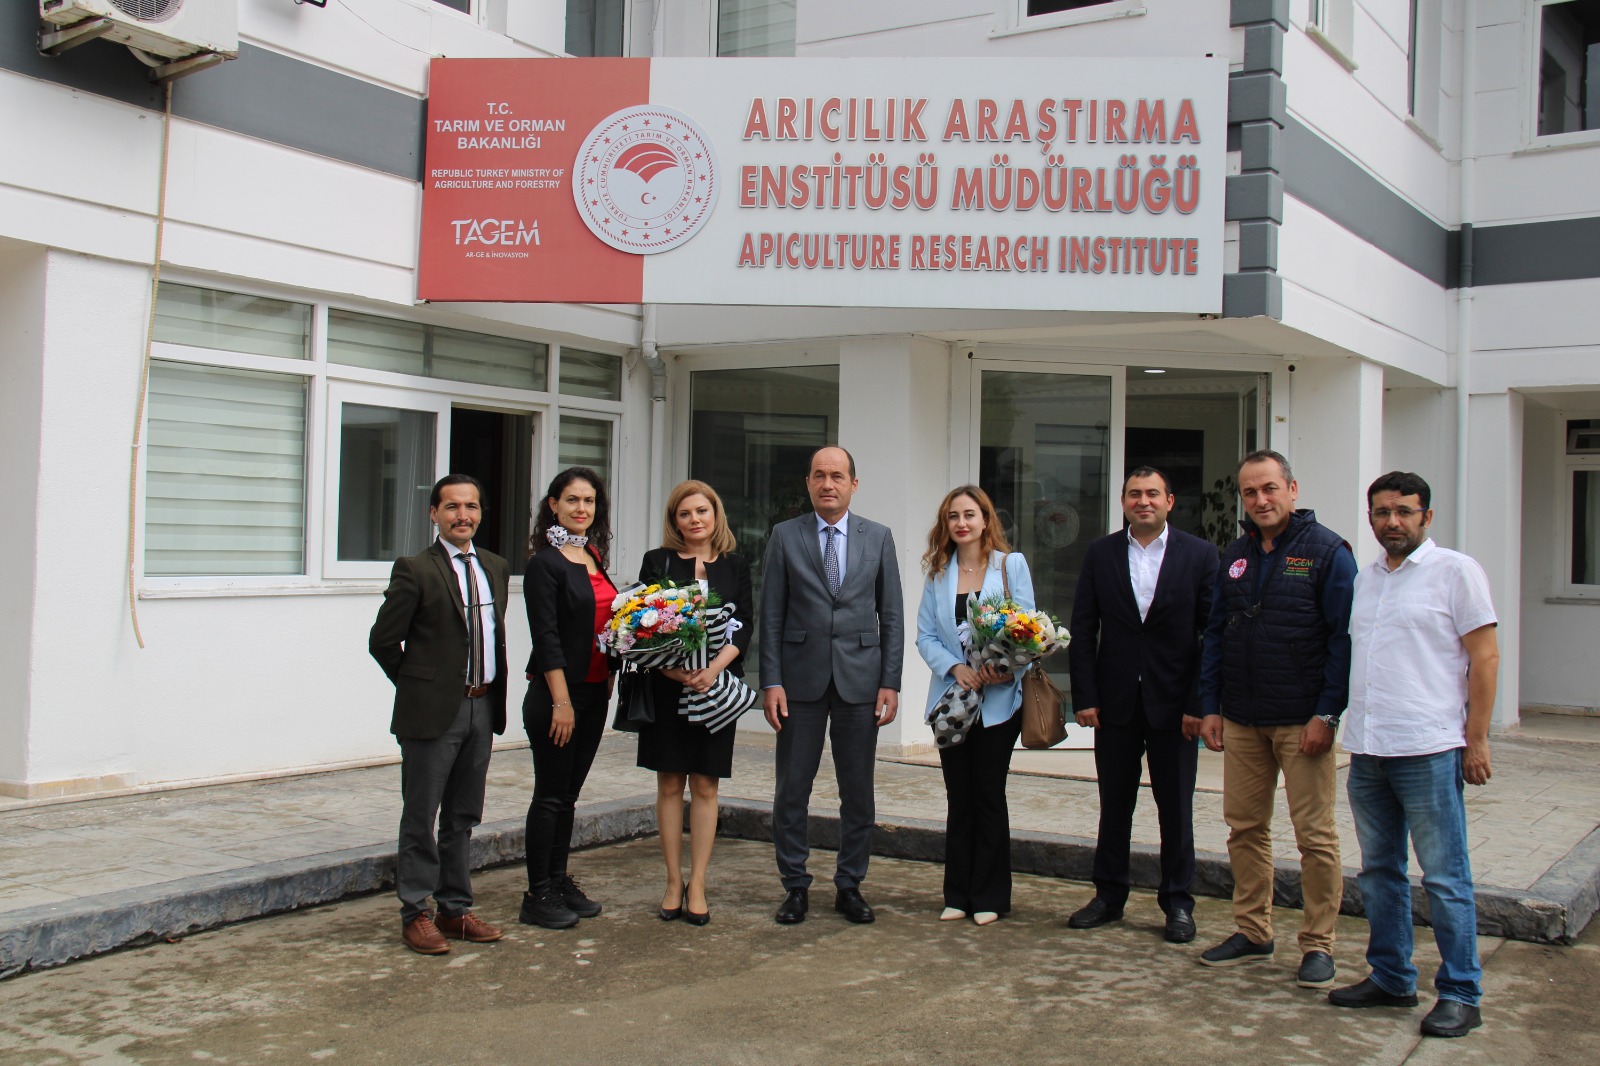 Azerbaijan Baku State University (Bakı Dövlət Universiteti) and our Institute's collaboration efforts.